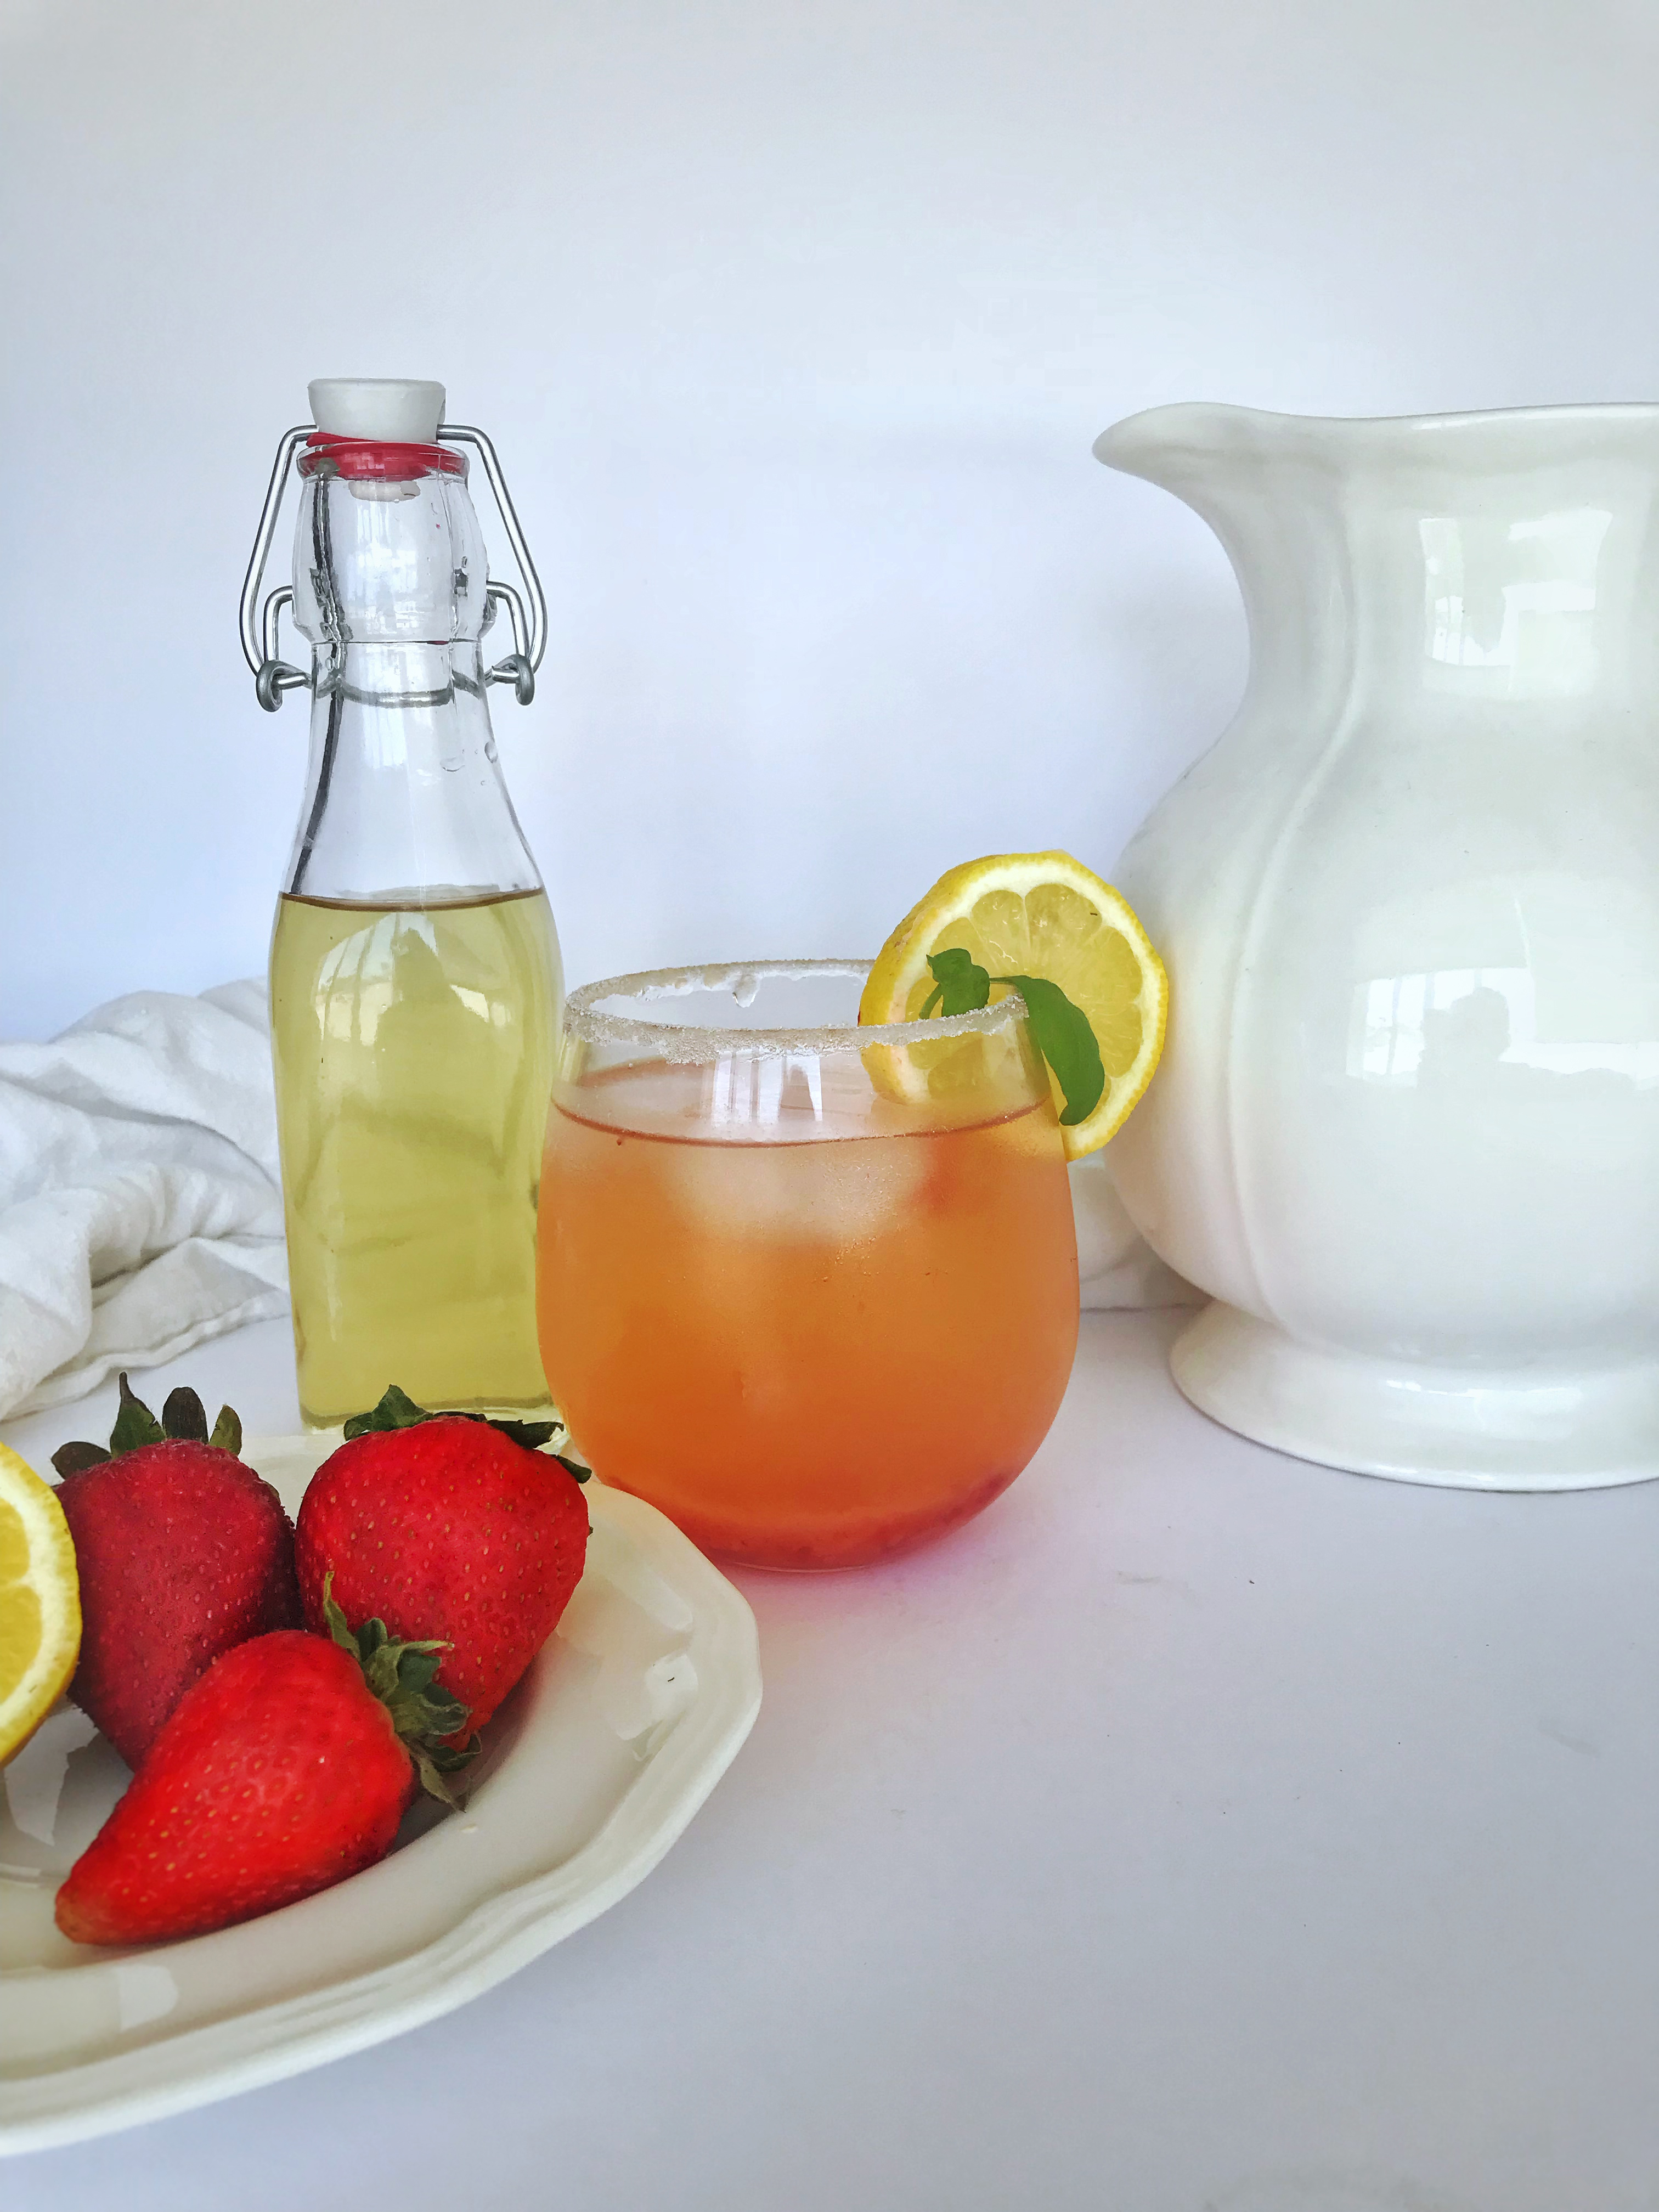 basil simple syrup and strawberry basil lemonade